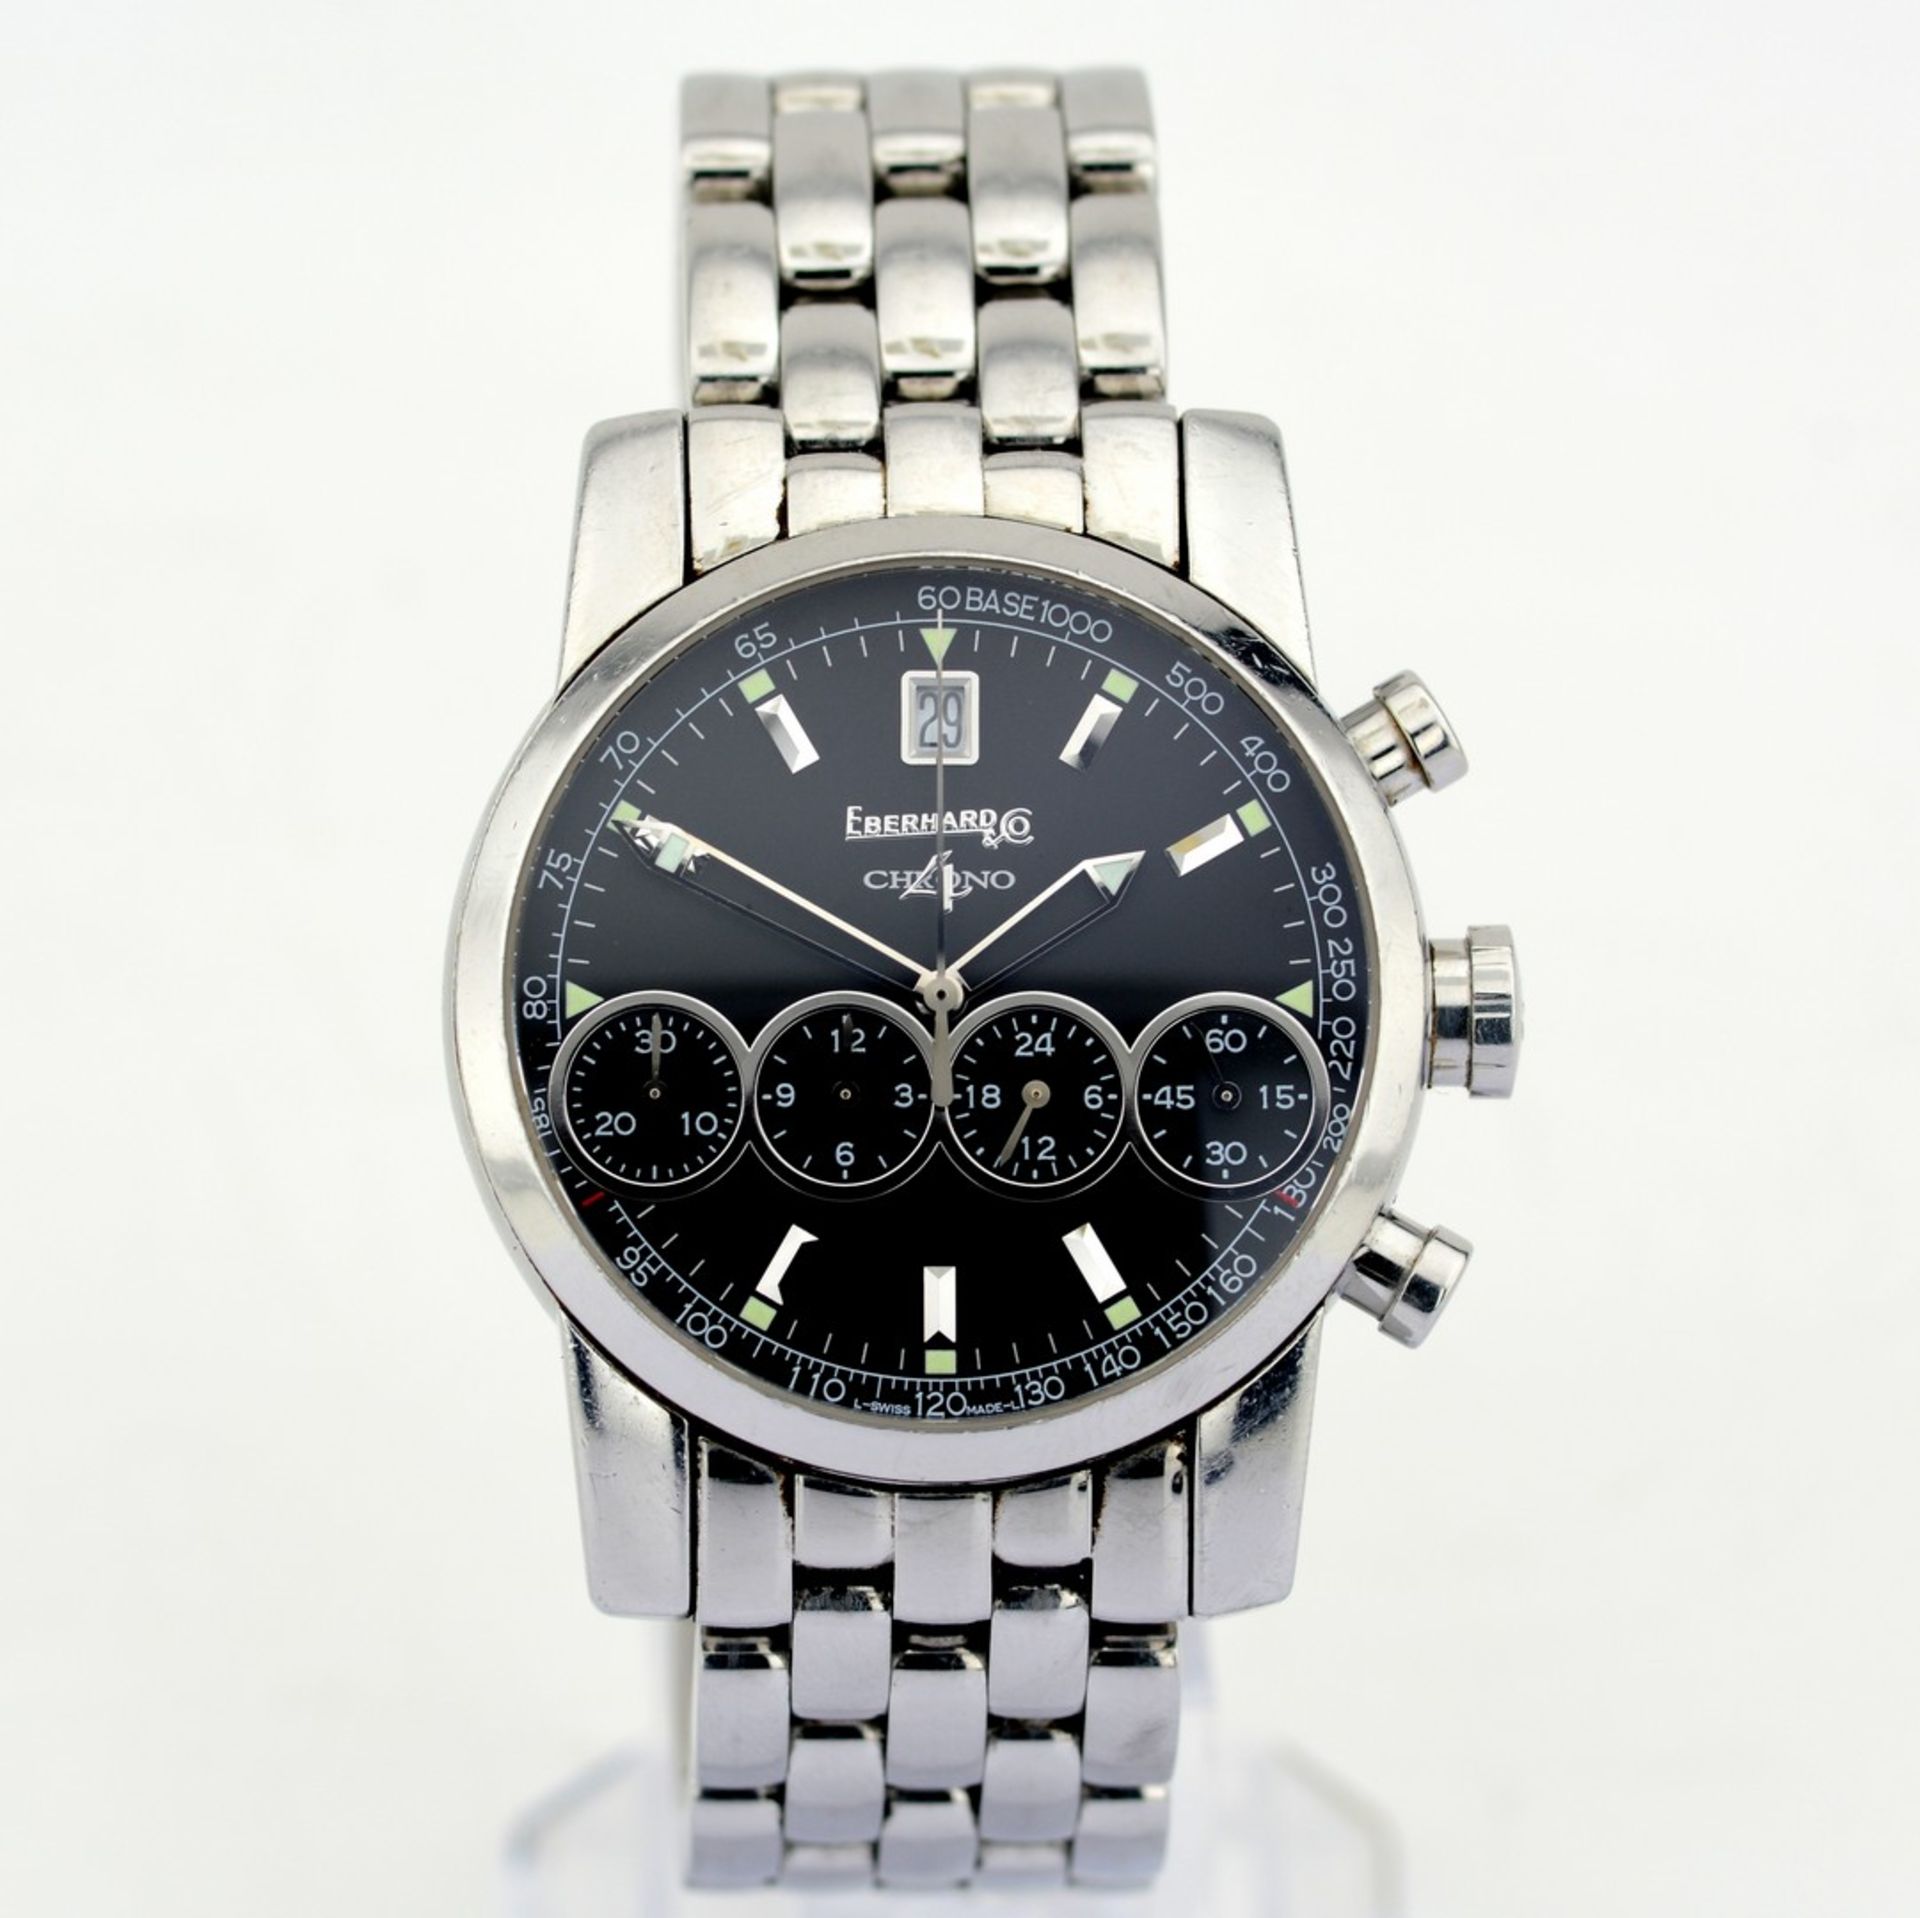 Eberhard & Co. / Chrono 4 Chronograph Automatic -Date - Gentlemen's Steel Wristwatch - Image 2 of 8